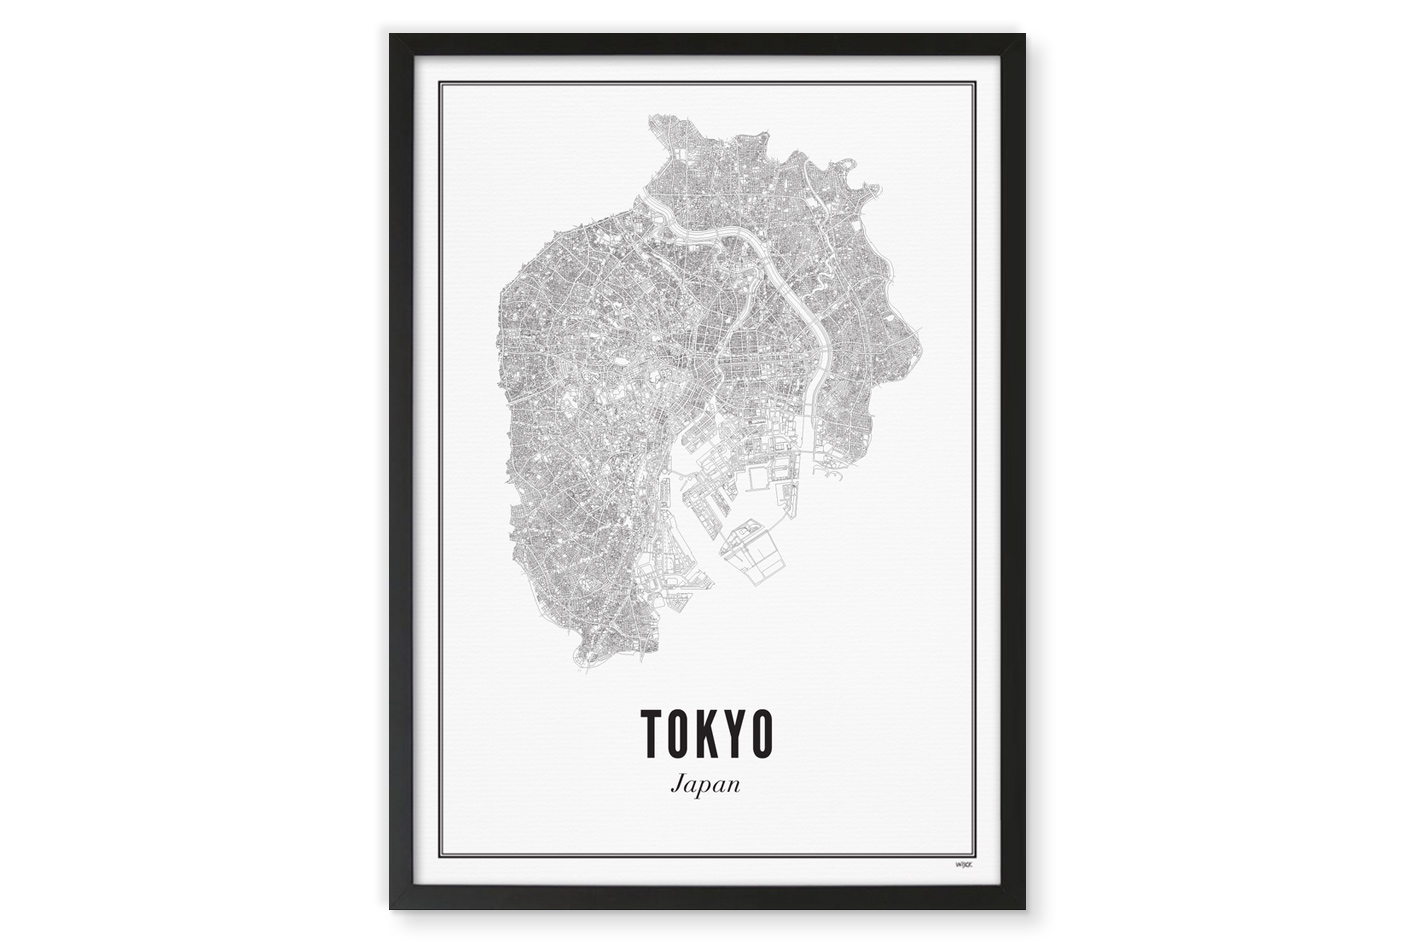 Japan Garten Deko Elegant Framed Map Poster Lost In tokyo 8×12 Inches